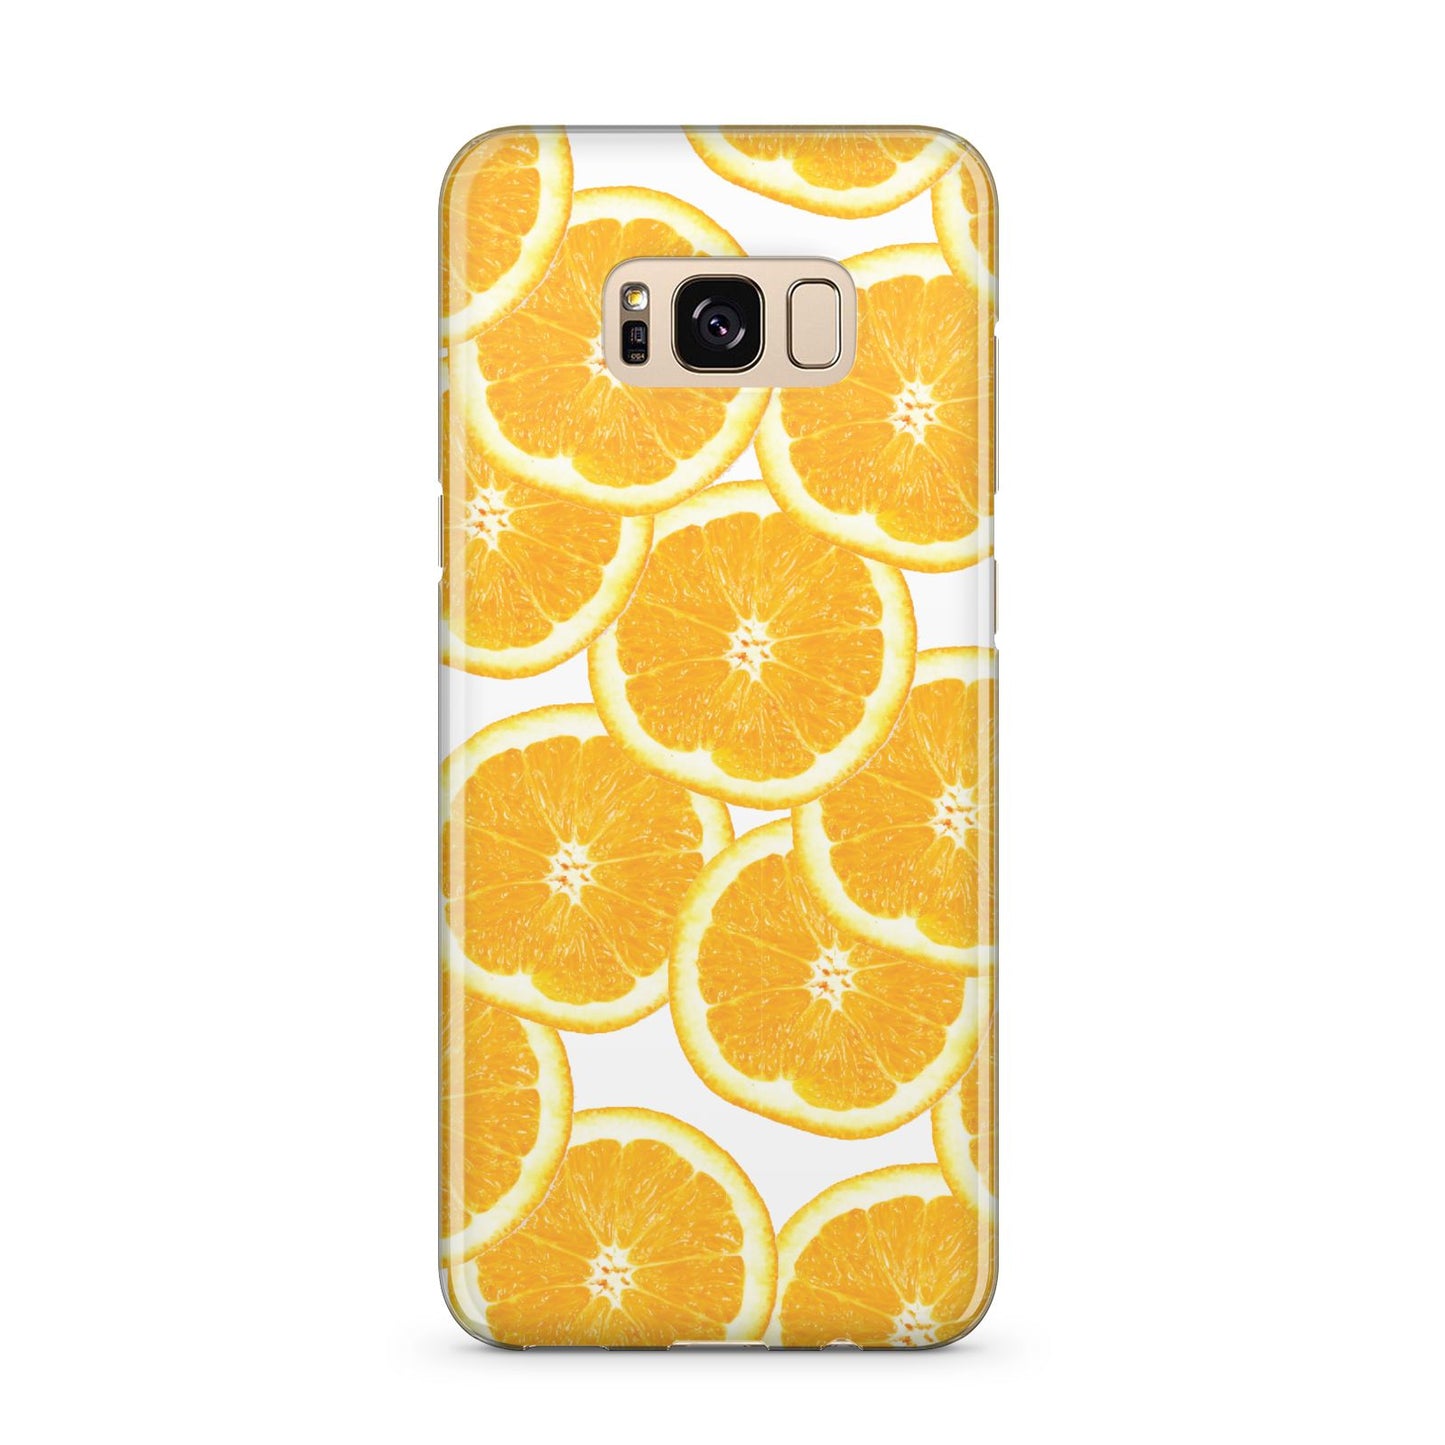 Orange Fruit Slices Samsung Galaxy S8 Plus Case